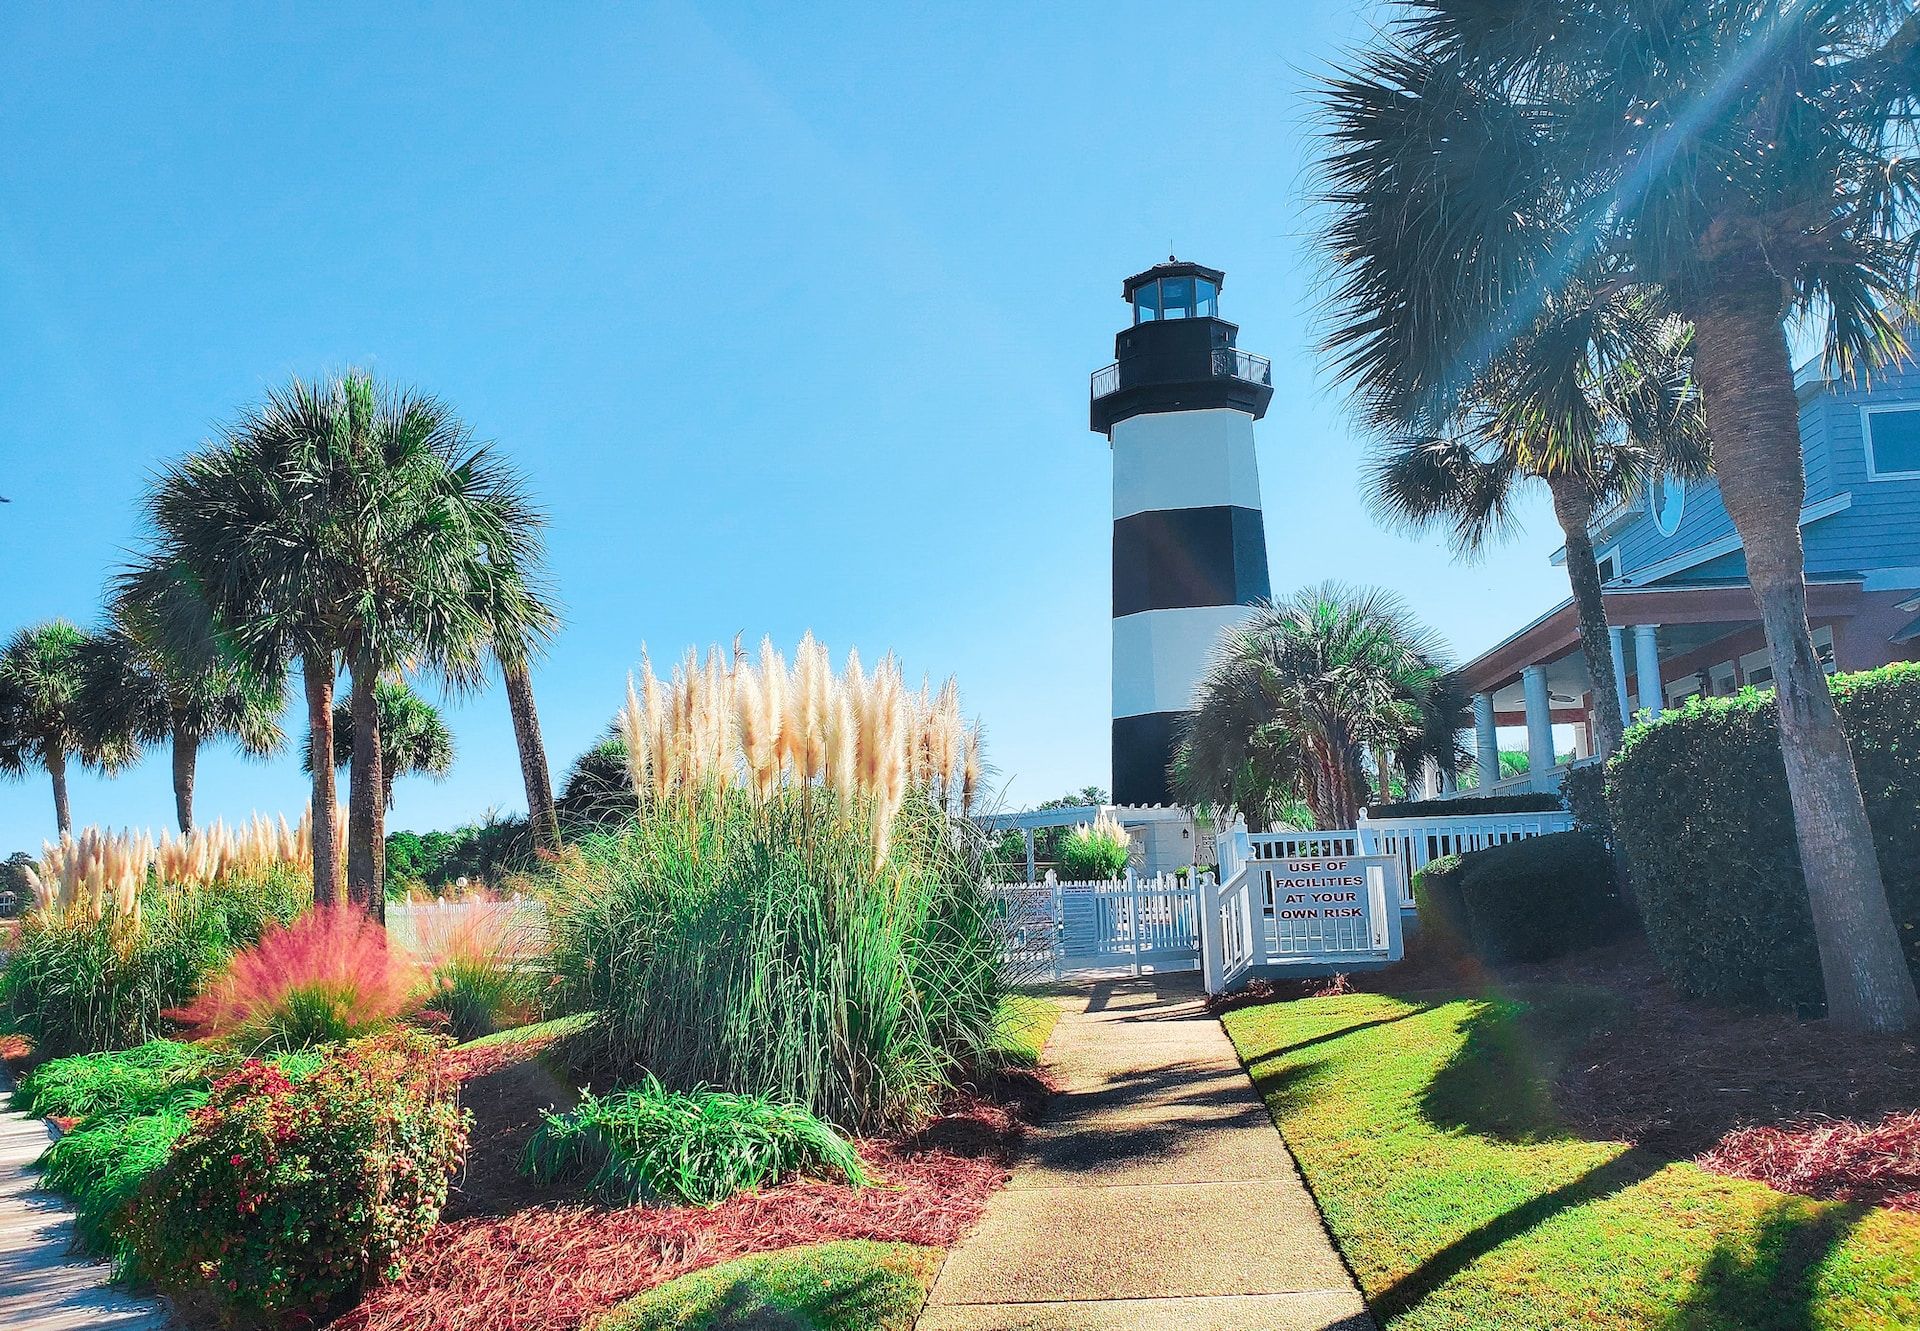 South Myrtle Beach Lighthouse and Marina, South Carolina